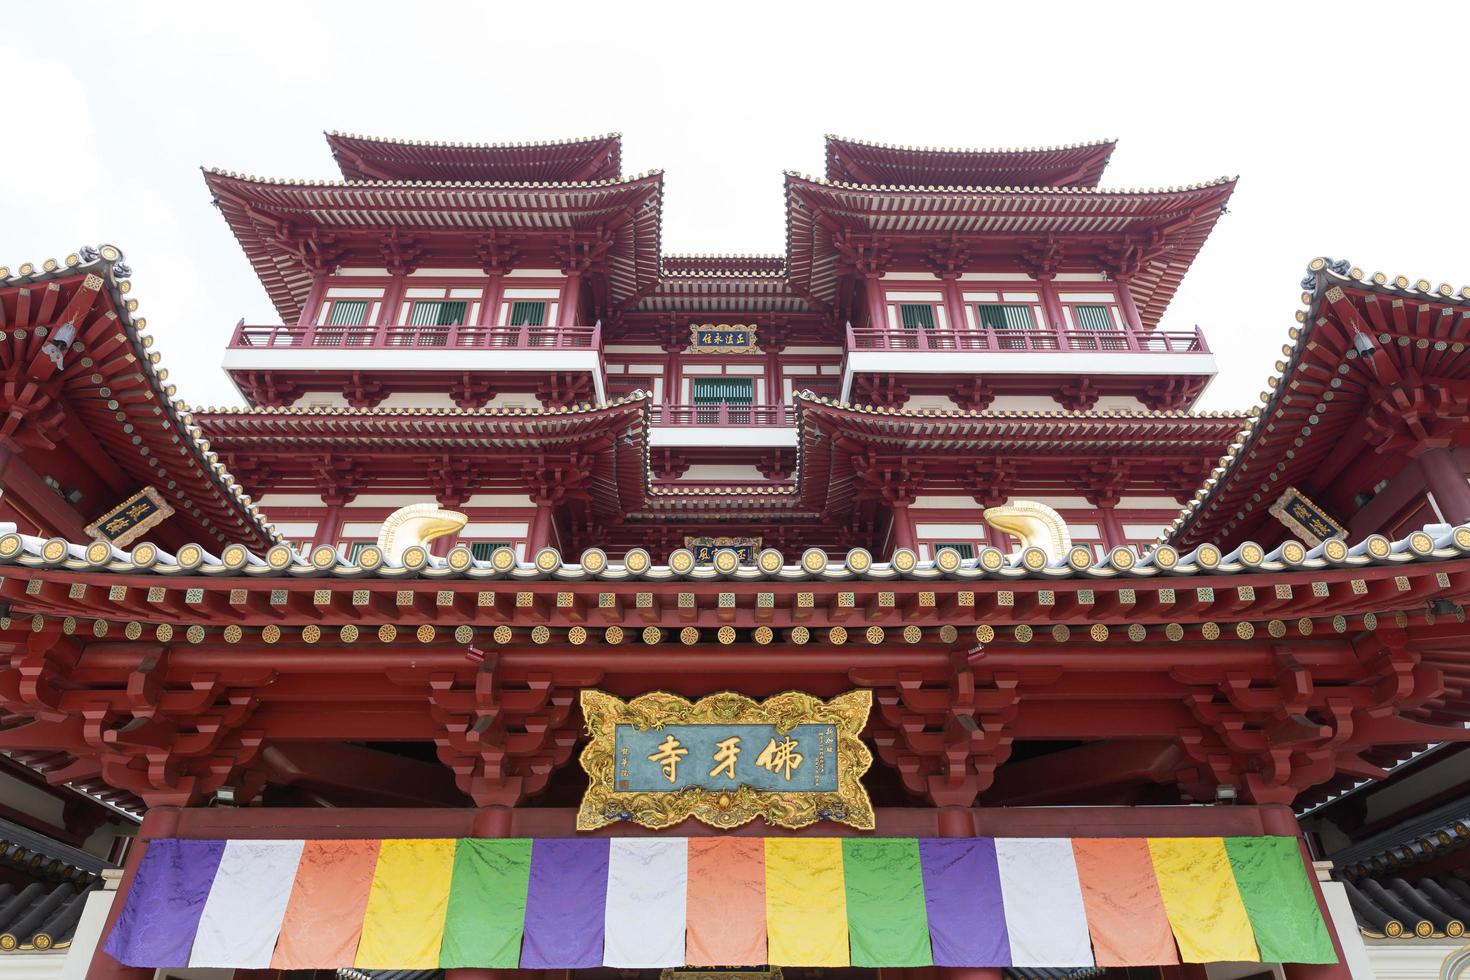 boeddha tand relikwie tempel in chinatown singapore foto